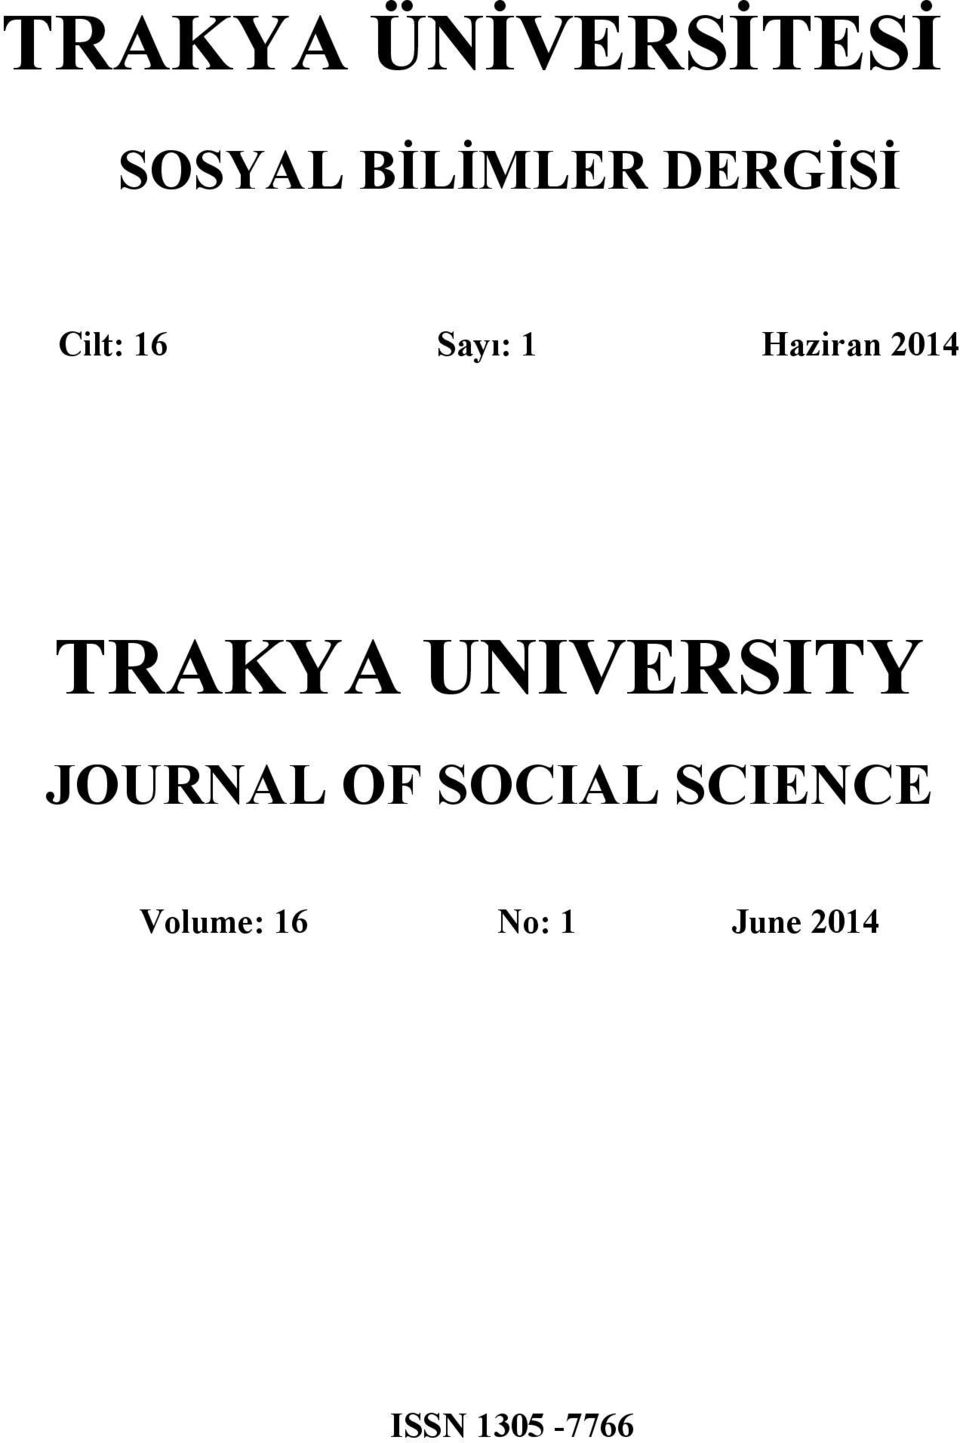 TRAKYA UNIVERSITY JOURNAL OF SOCIAL